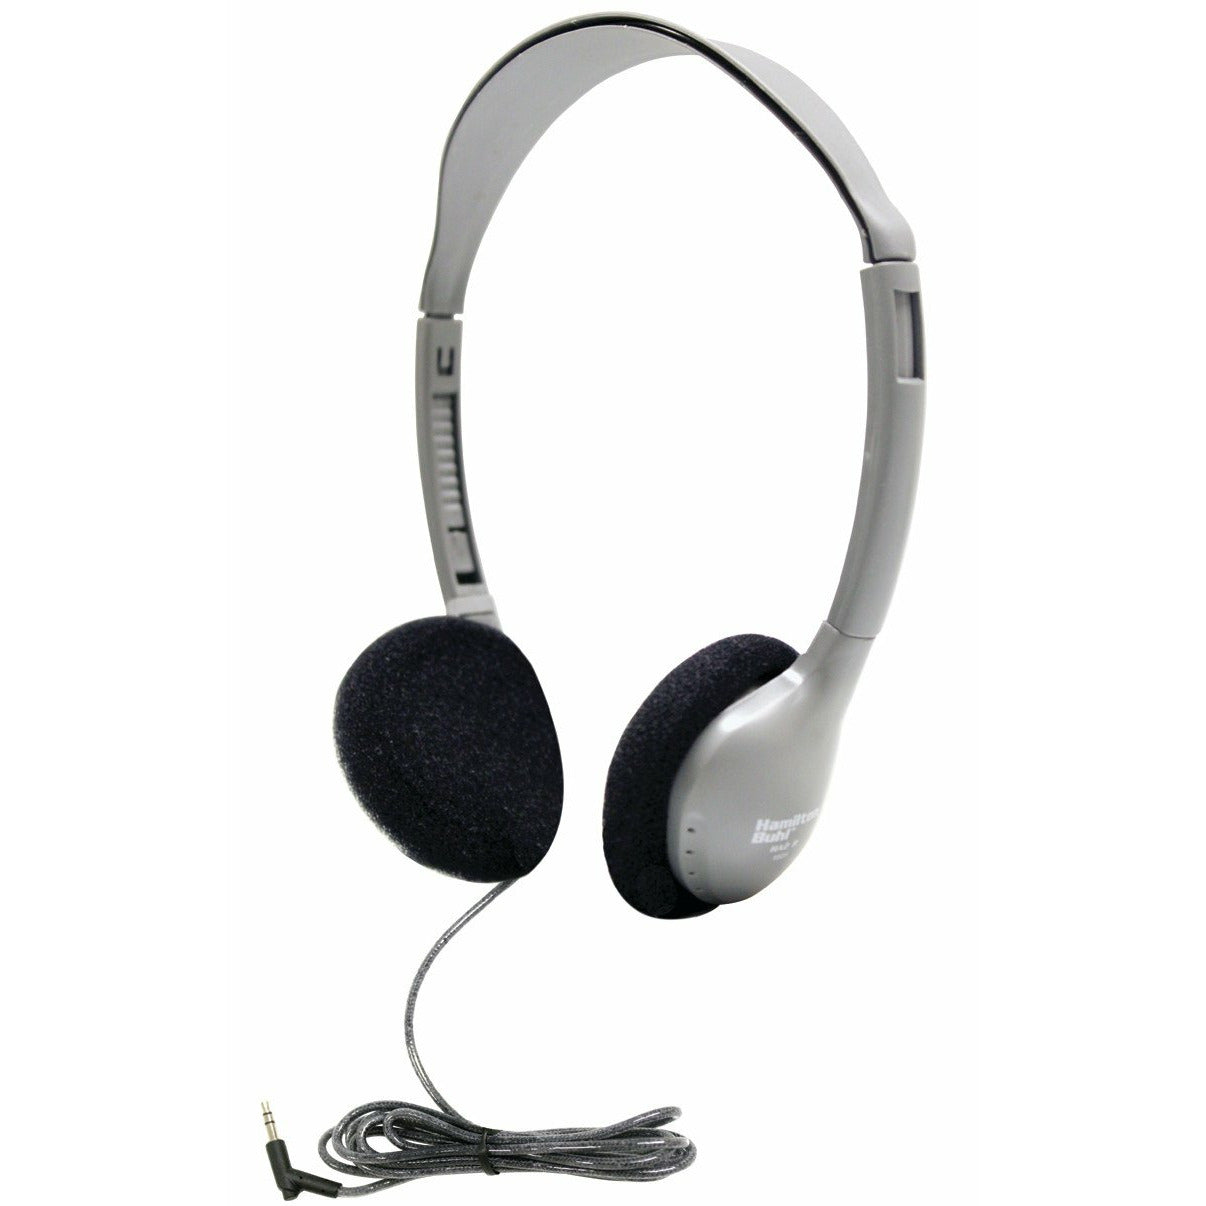 Personal Headphones with foam ear cushions, w/o volume control